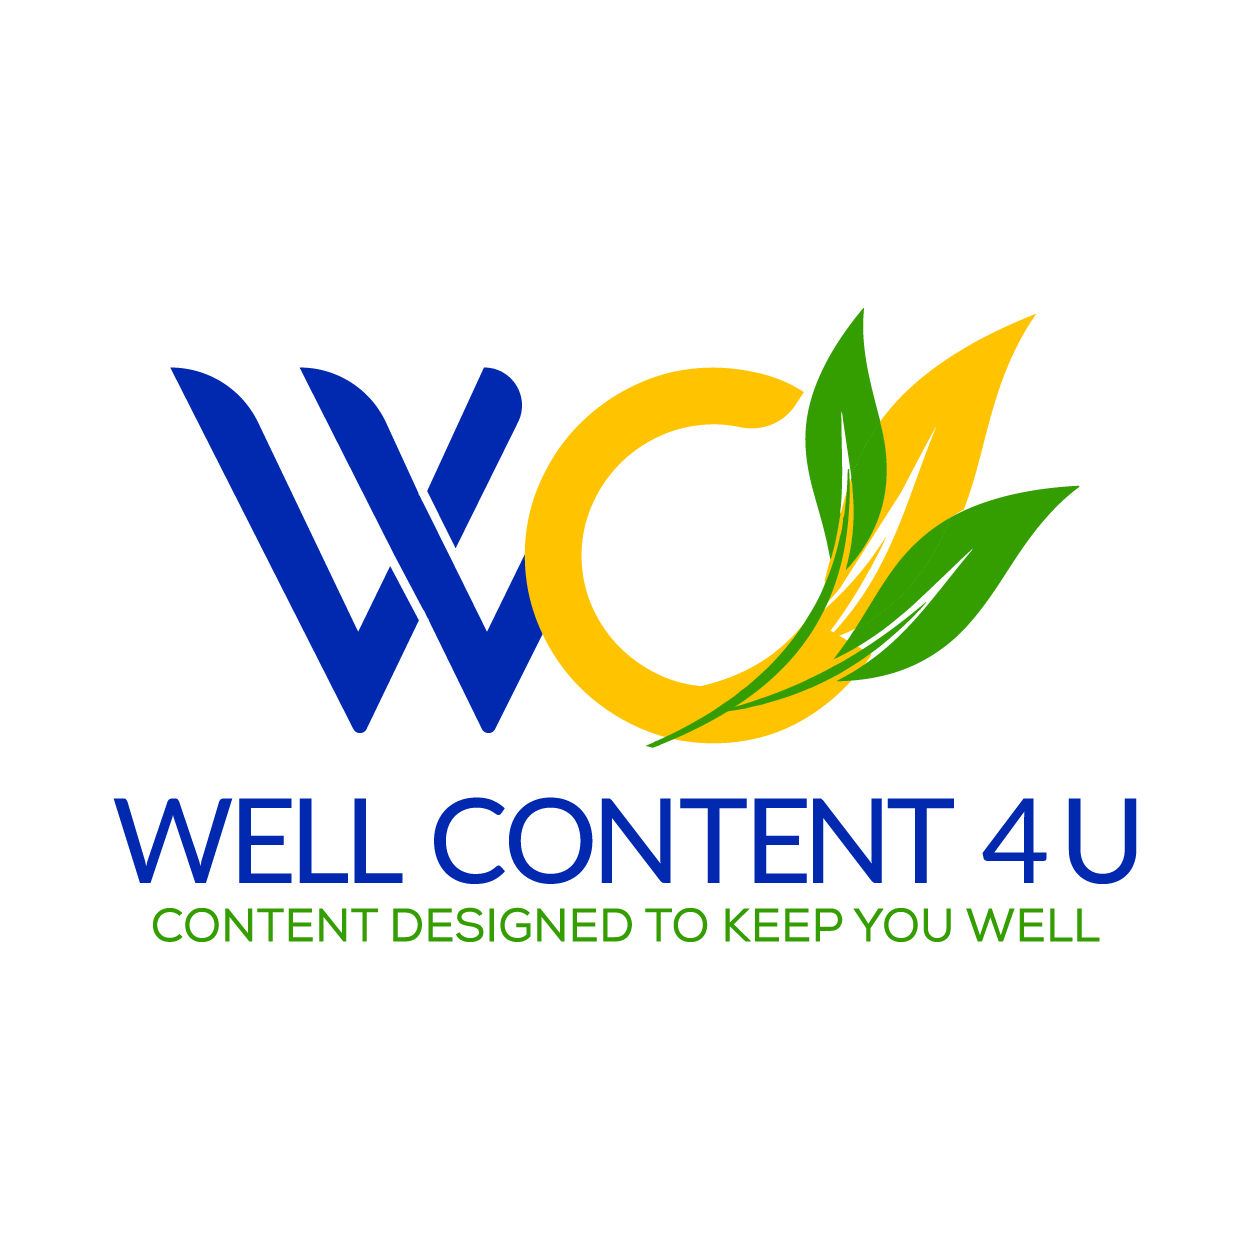 Well Content 4 U